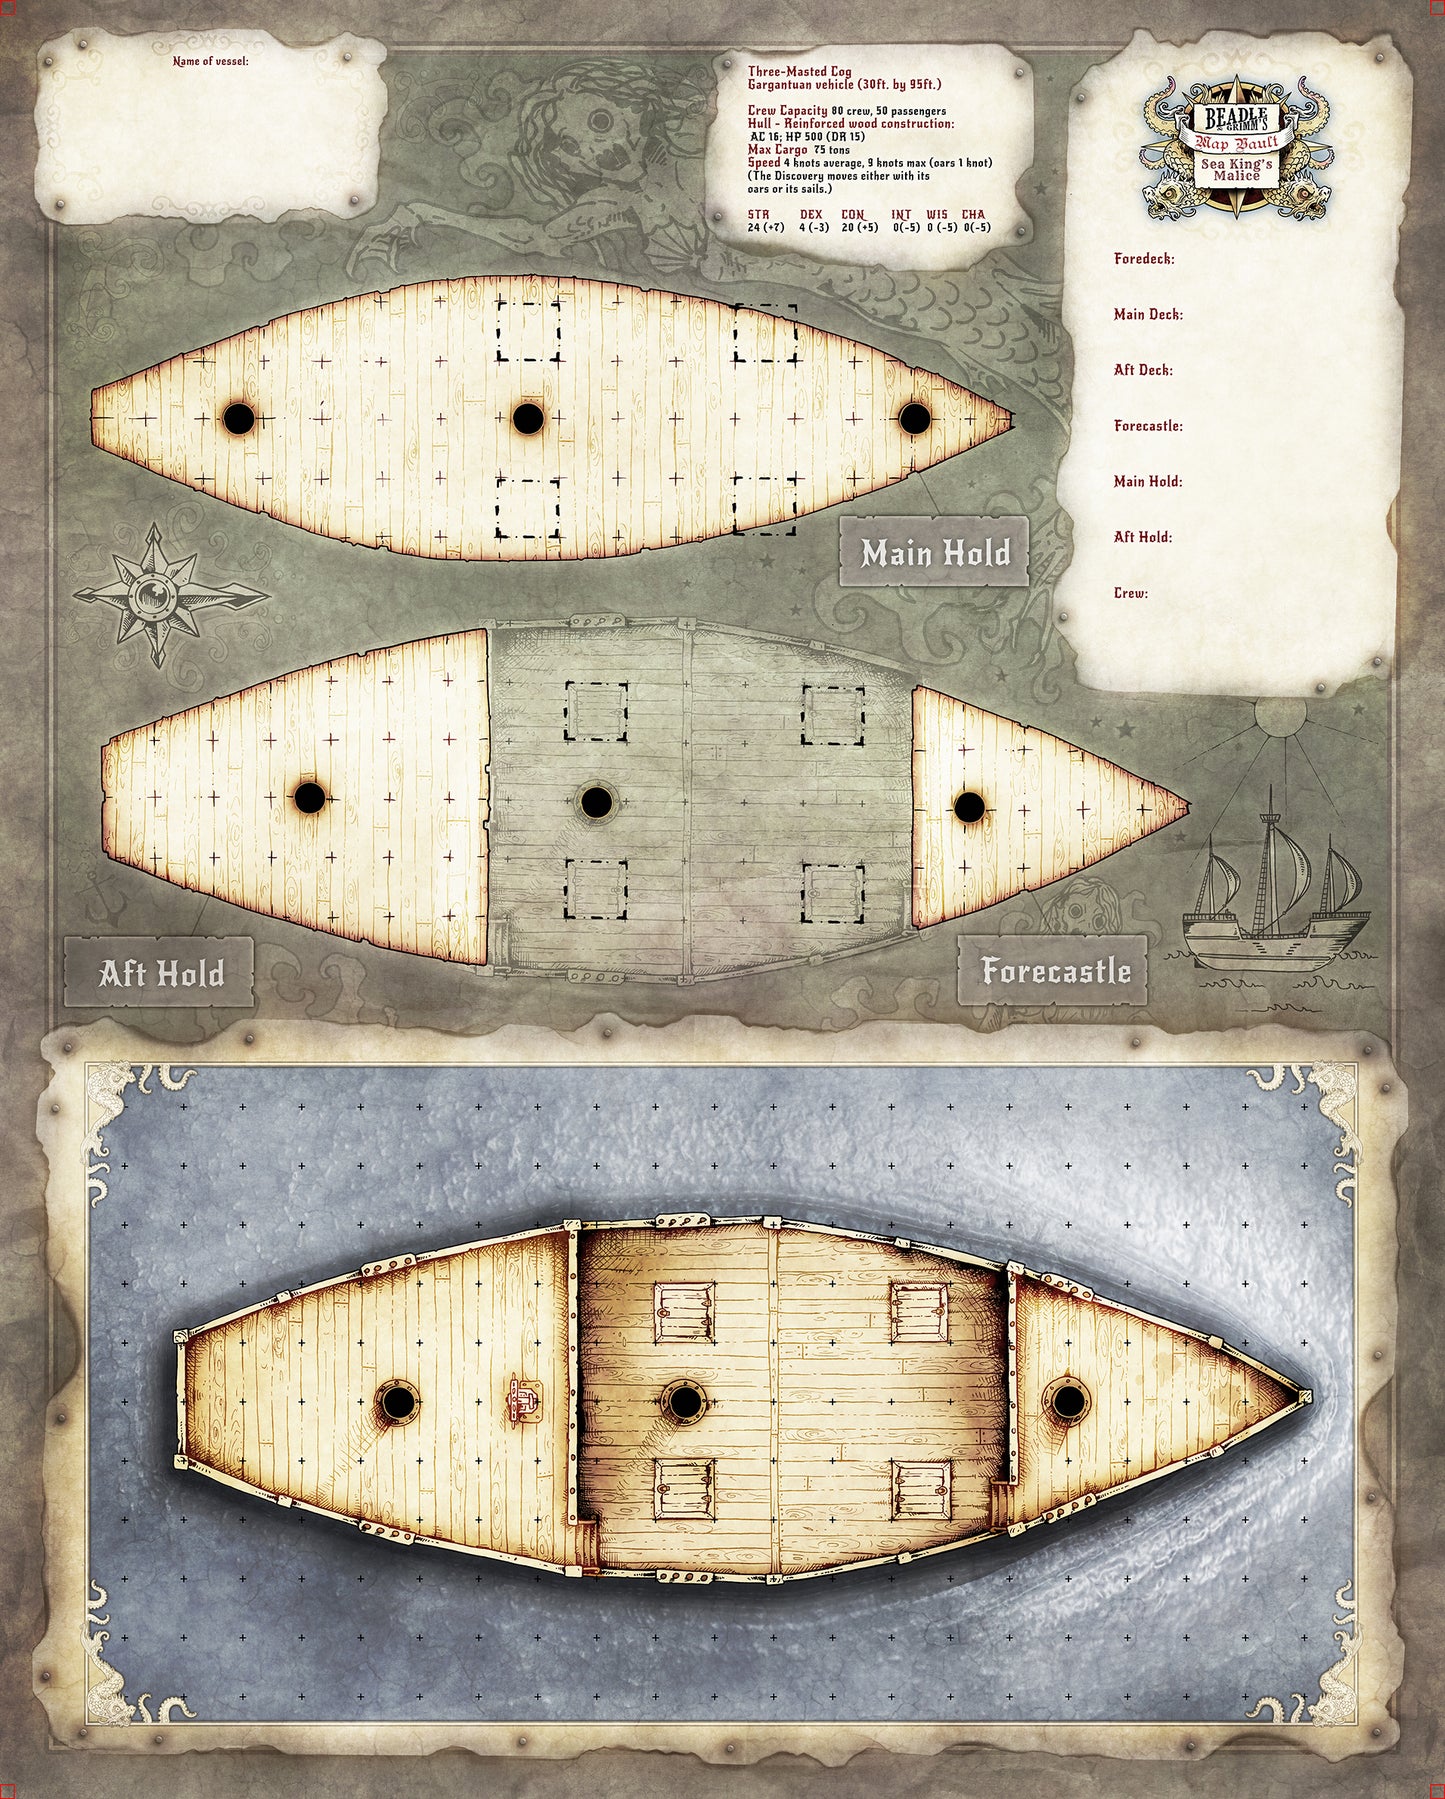 Map Vault - Sea King's Malice Edition